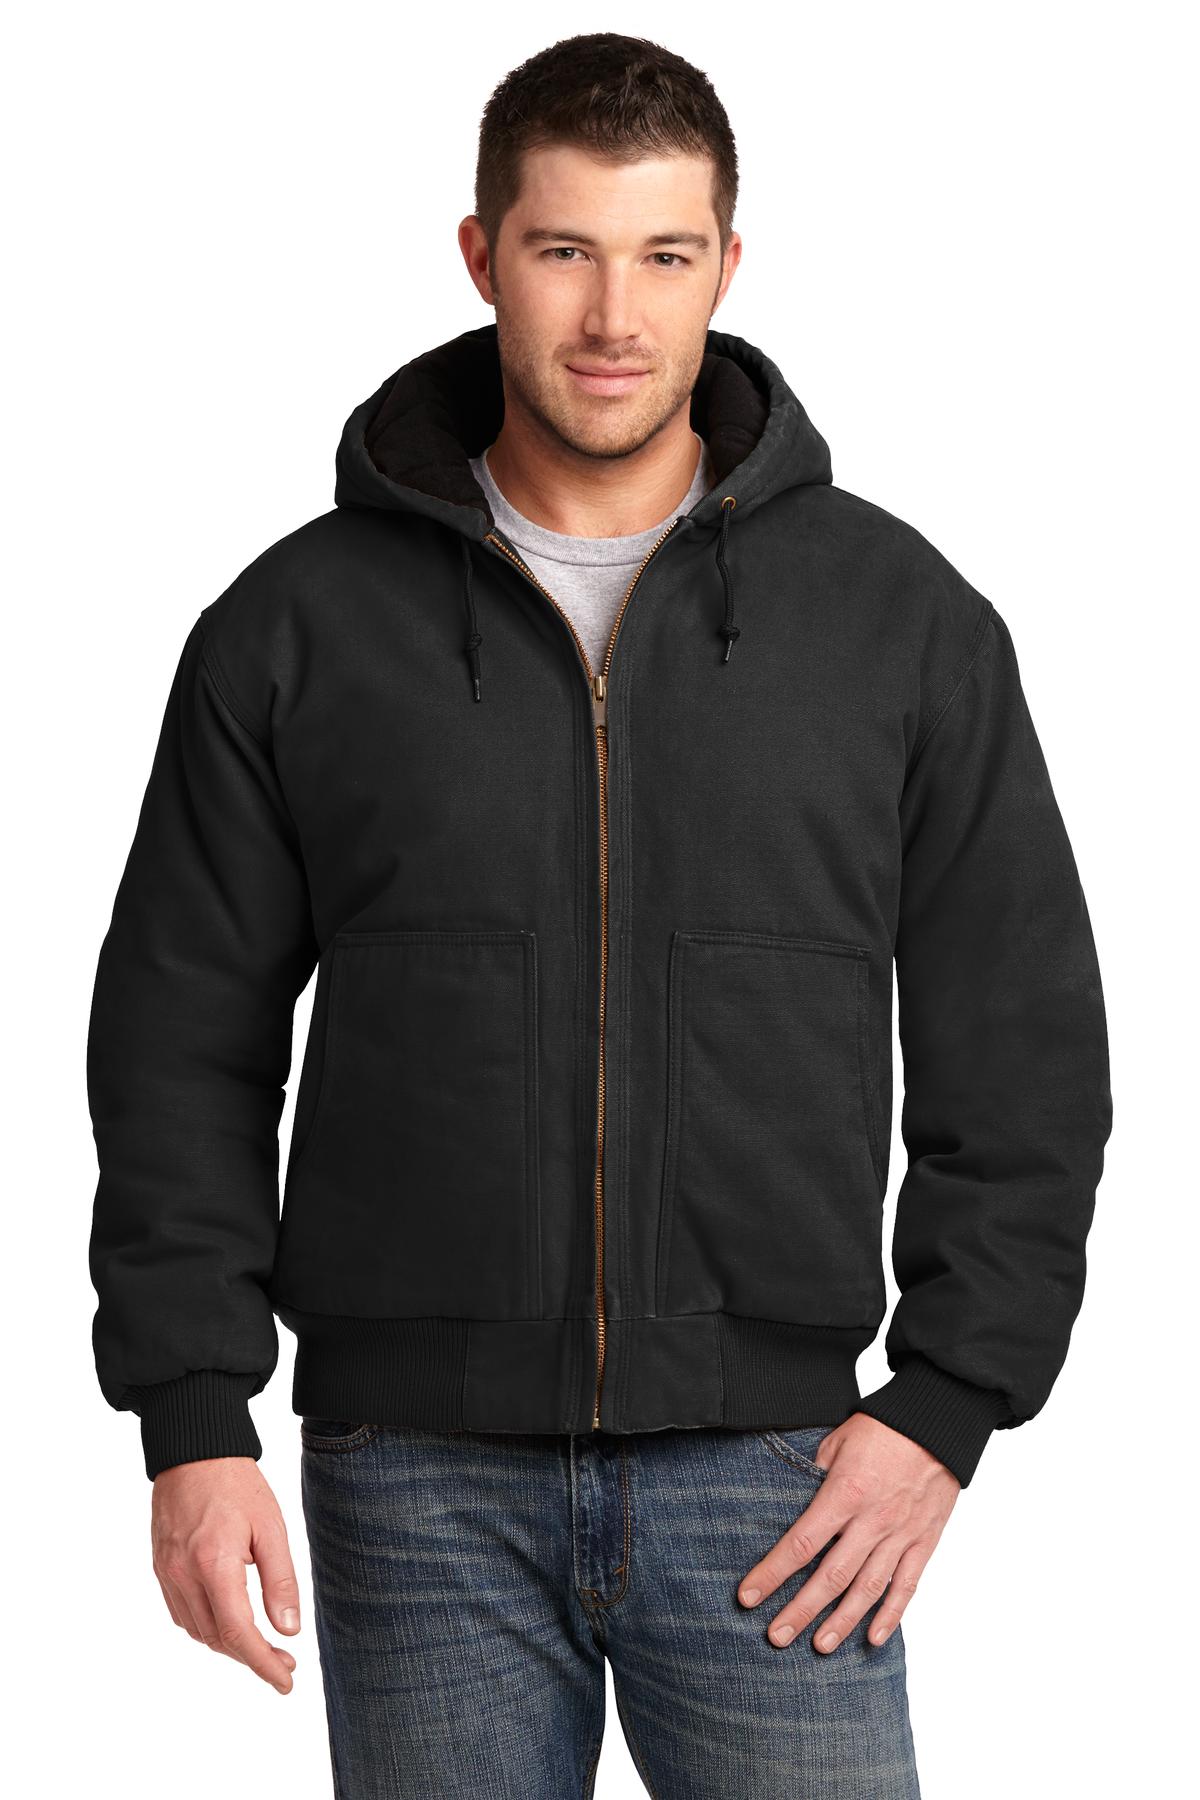 Cornerstone Men's Pouch Pockets Insulated Hooded Winter Work Jacket CSJ41